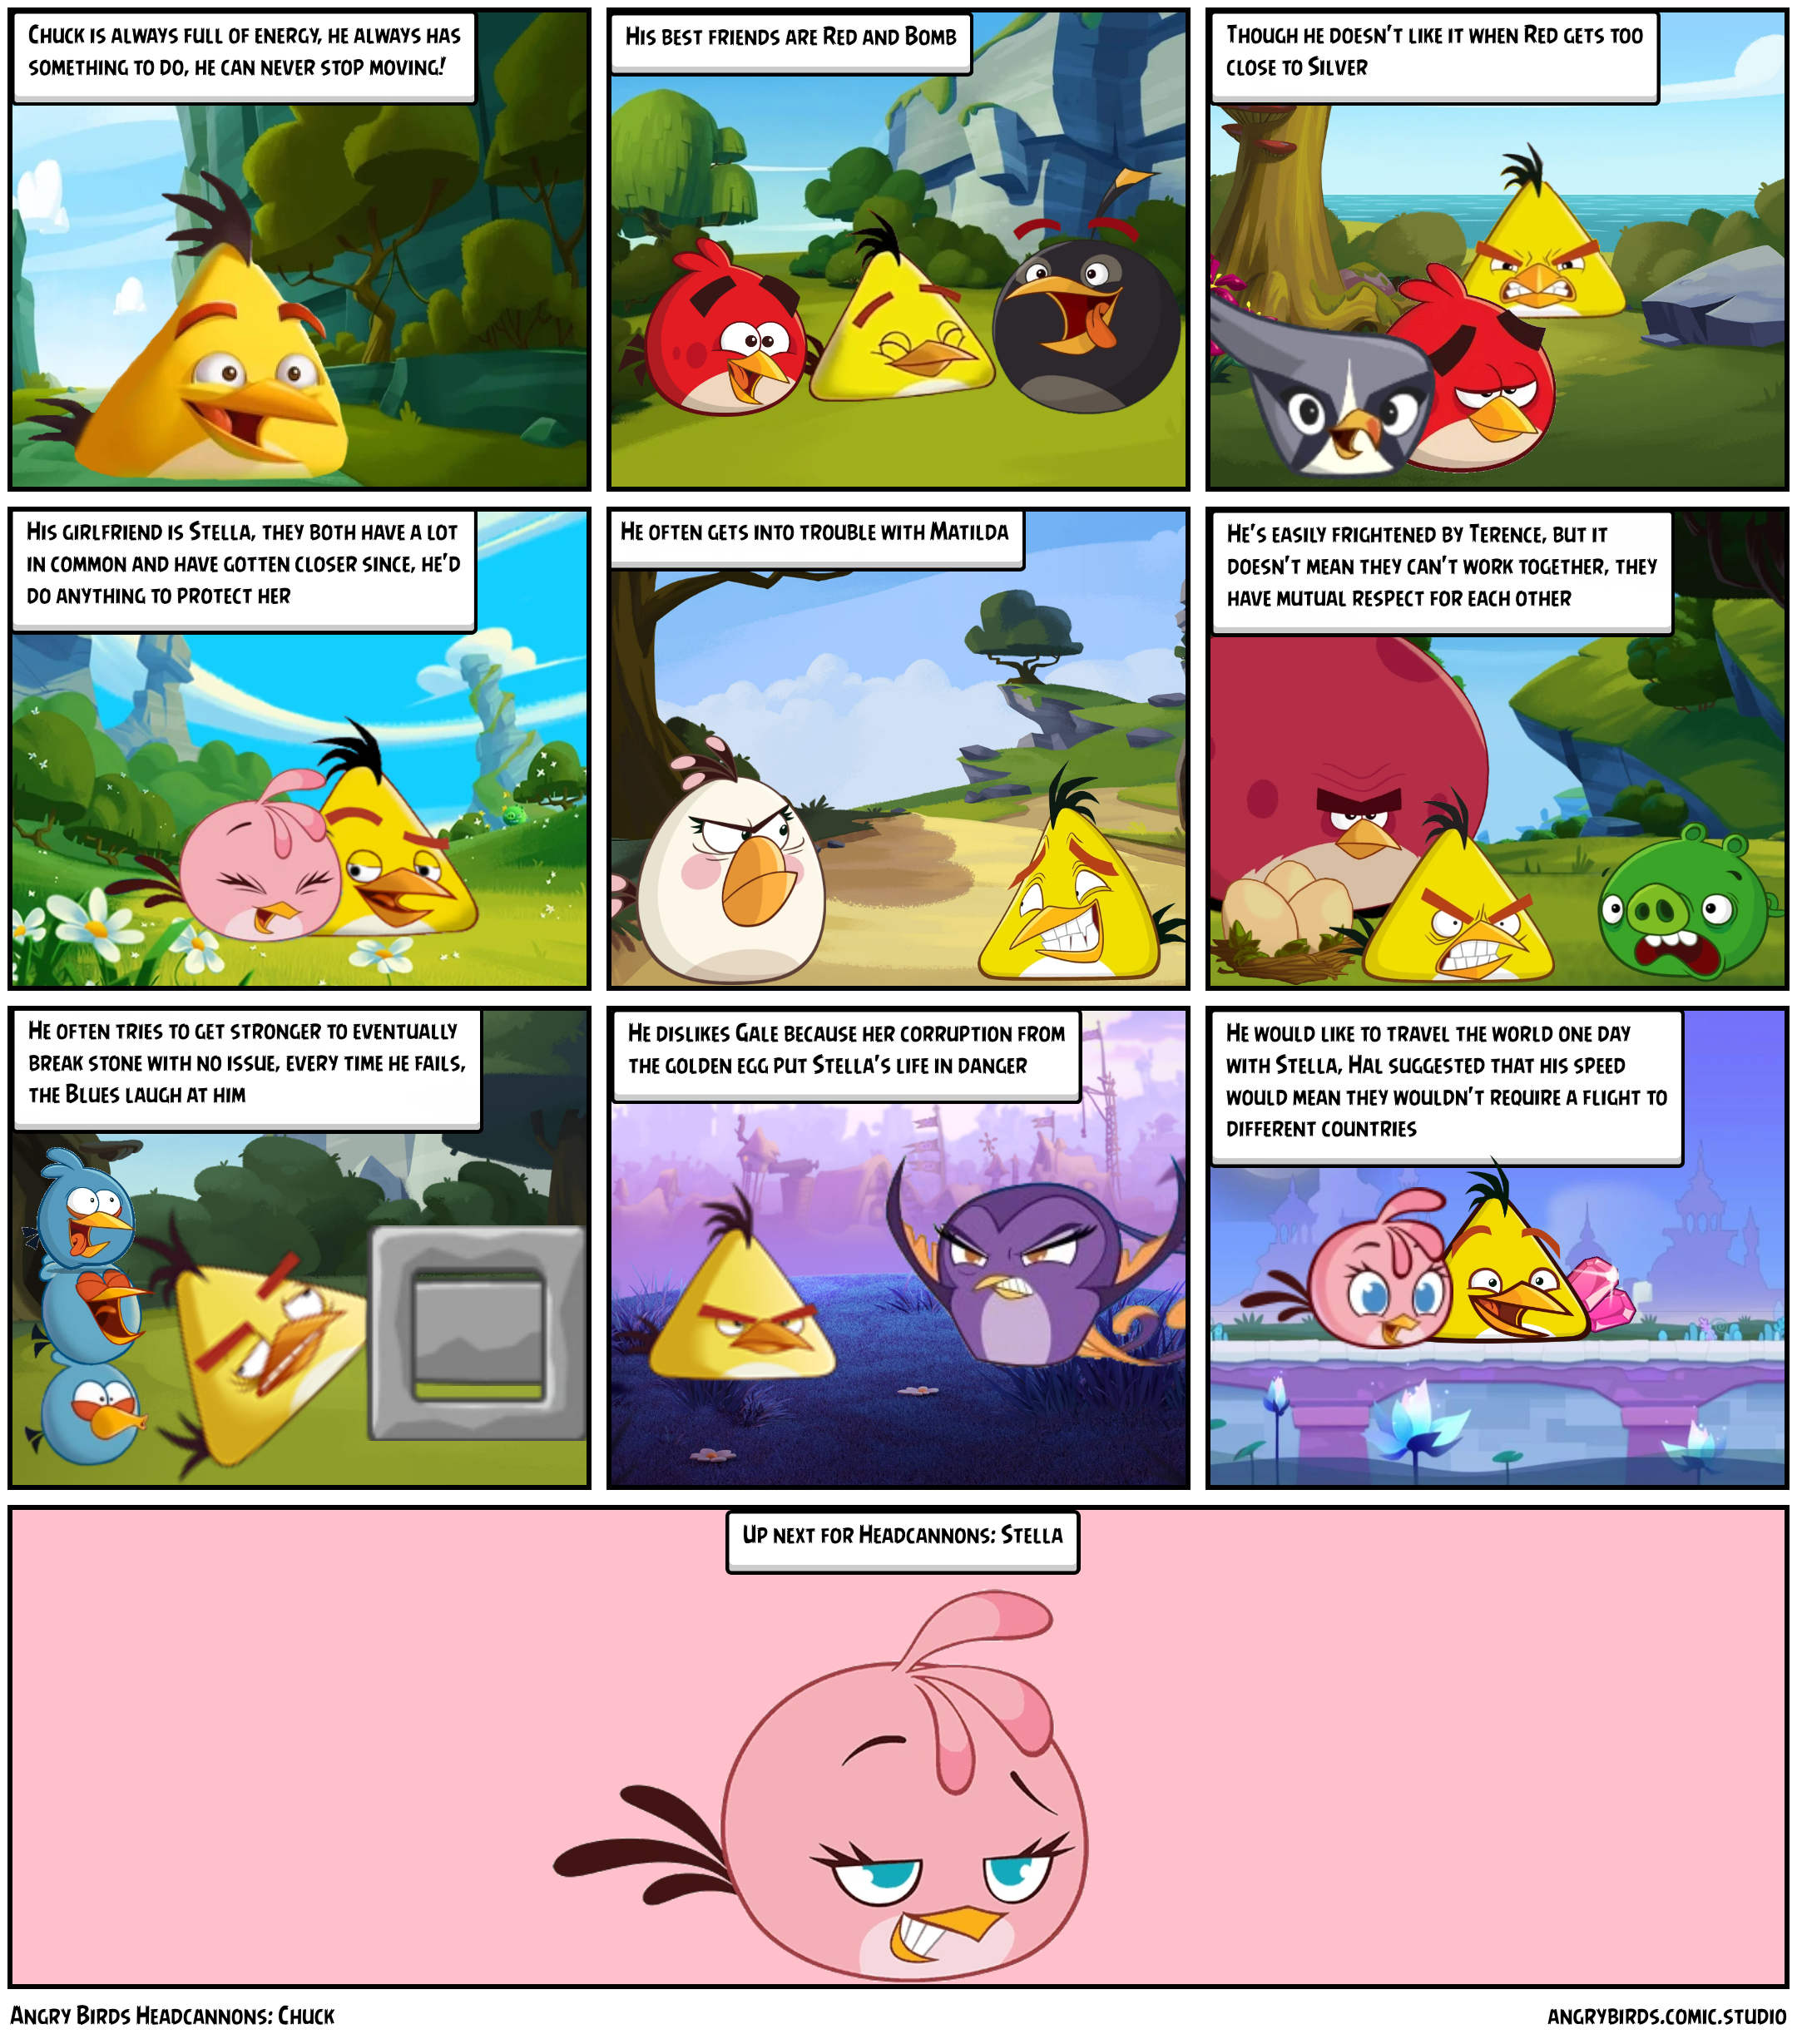 Angry Birds Headcannons: Chuck